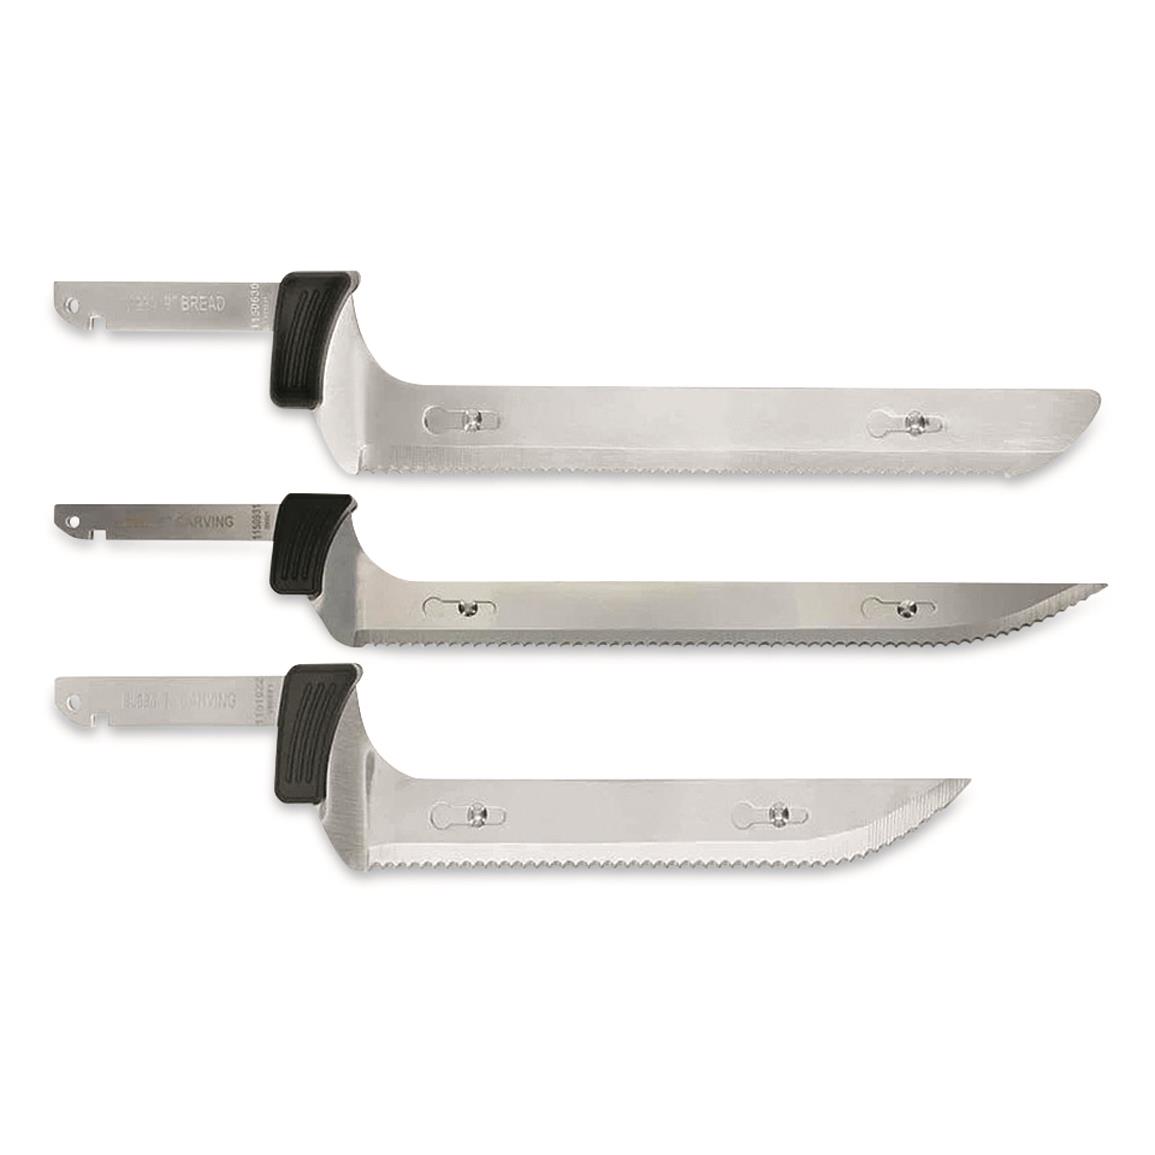 Bubba Complete Kitchen & Steak Knife Set